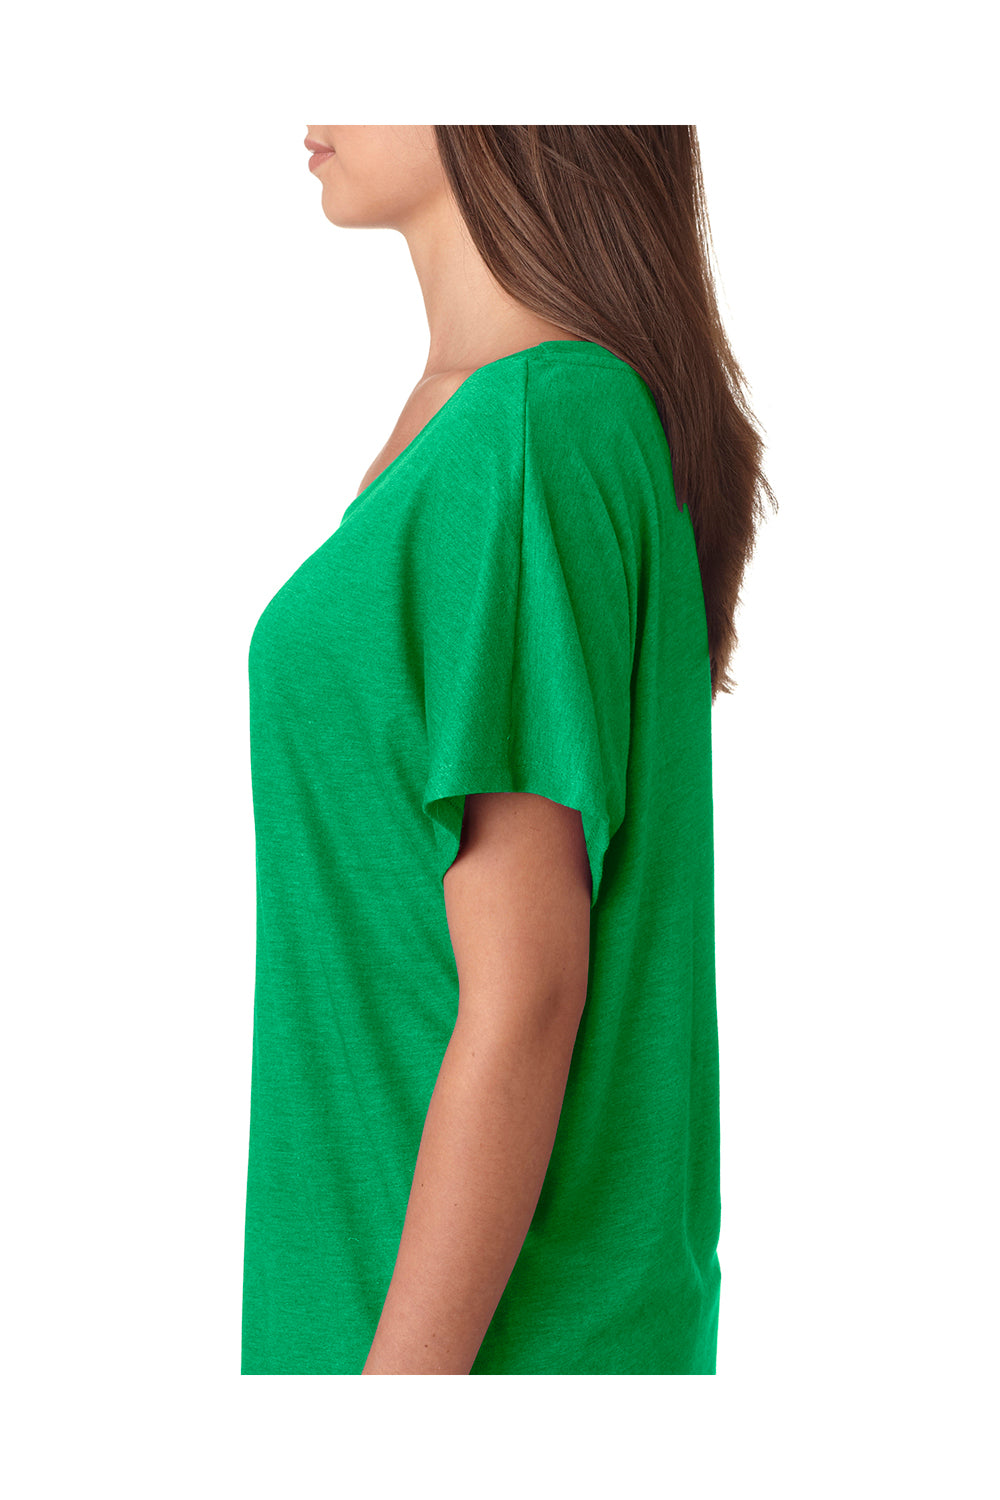 Next Level 6760 Womens Dolman Jersey Short Sleeve Scoop Neck T-Shirt Envy Green Side